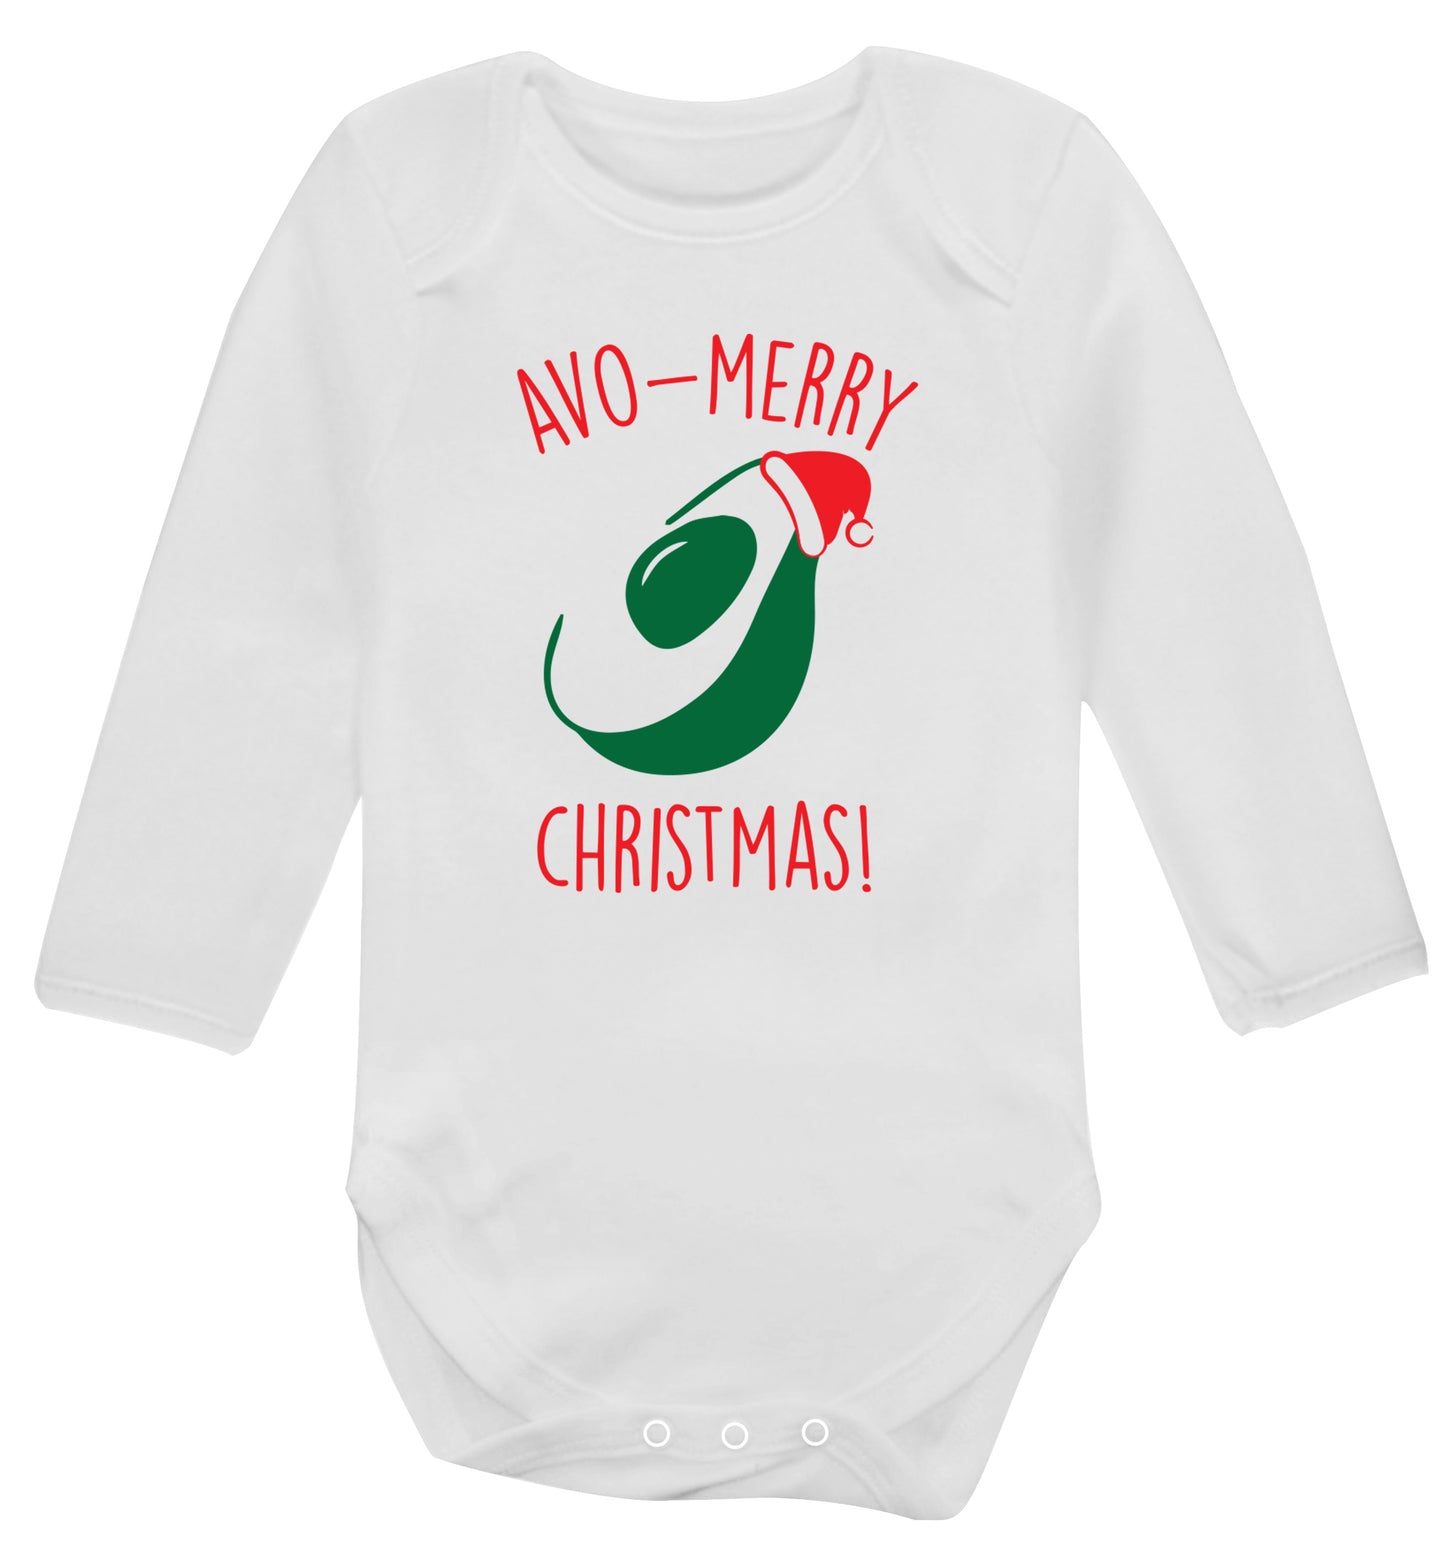 Avo-Merry Christmas Baby Vest long sleeved white 6-12 months